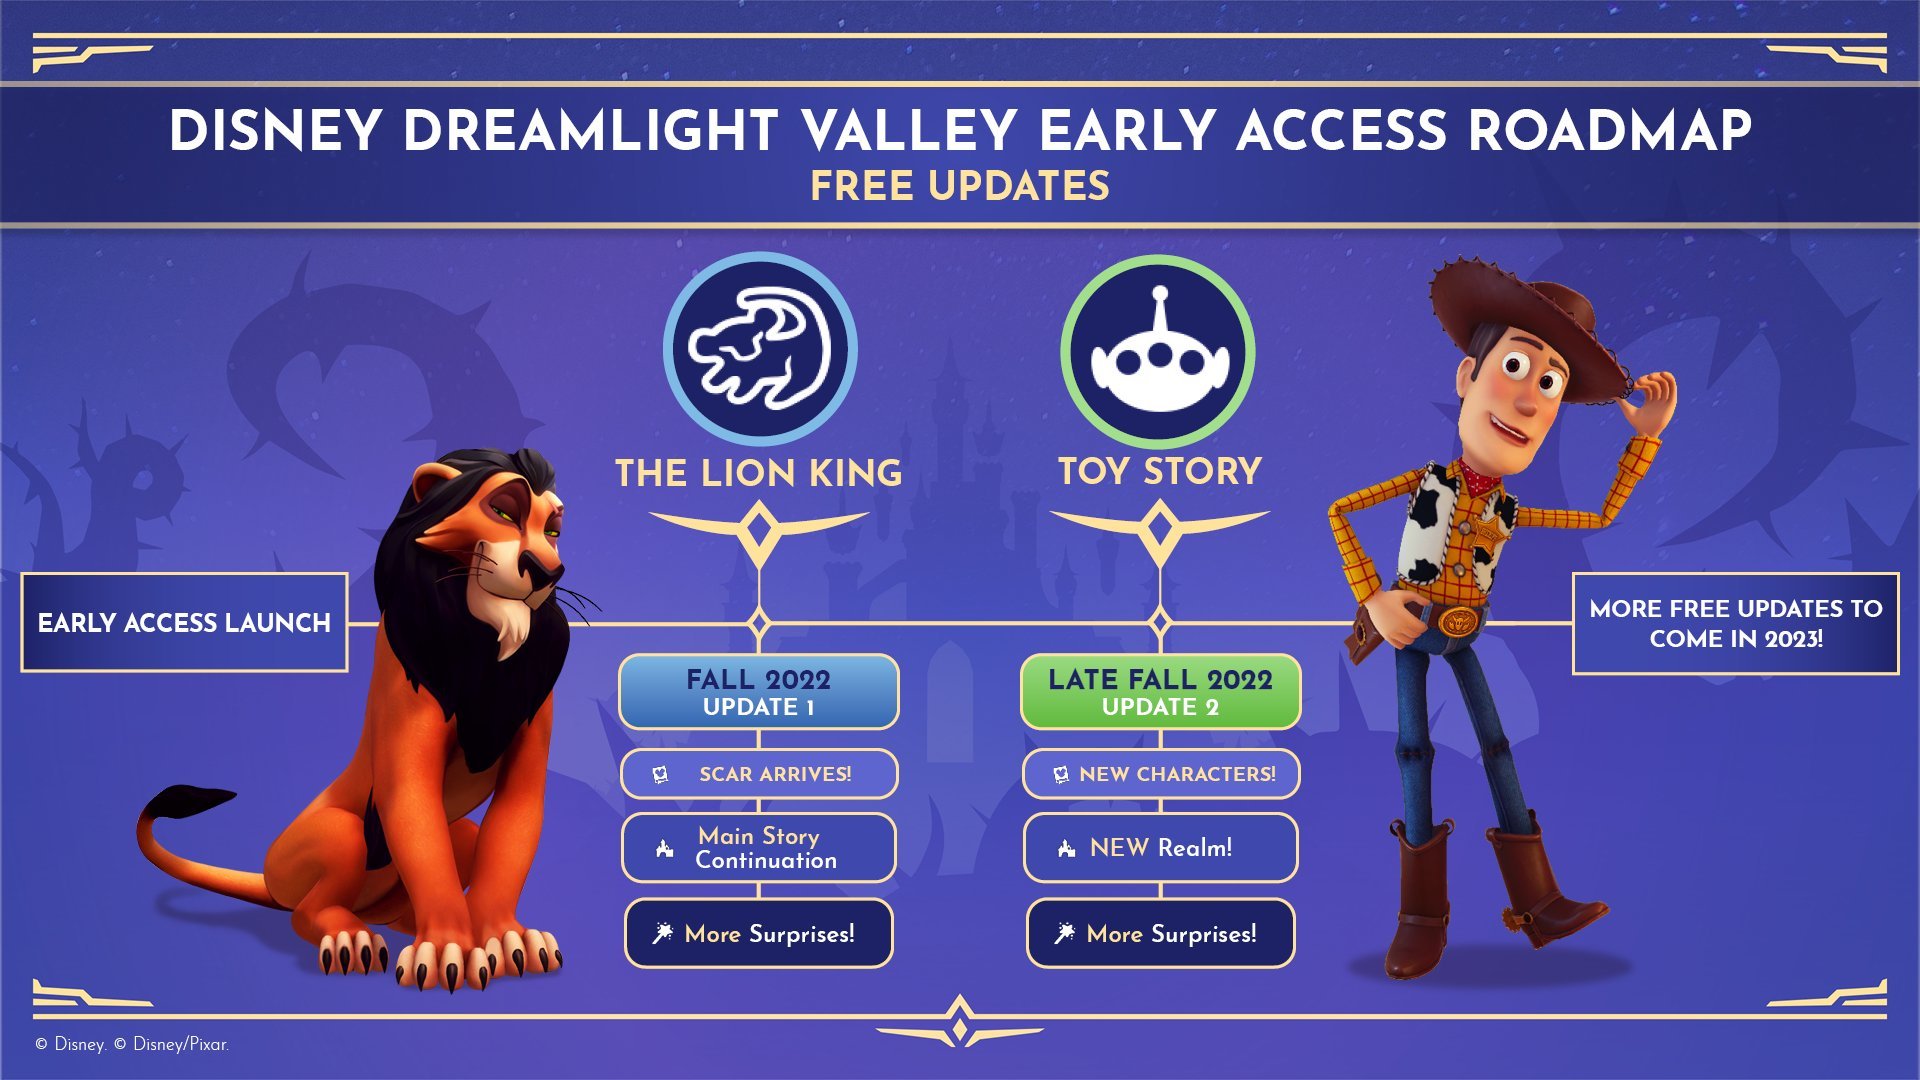 Disney Dreamlight Valley’s first major content update targets October